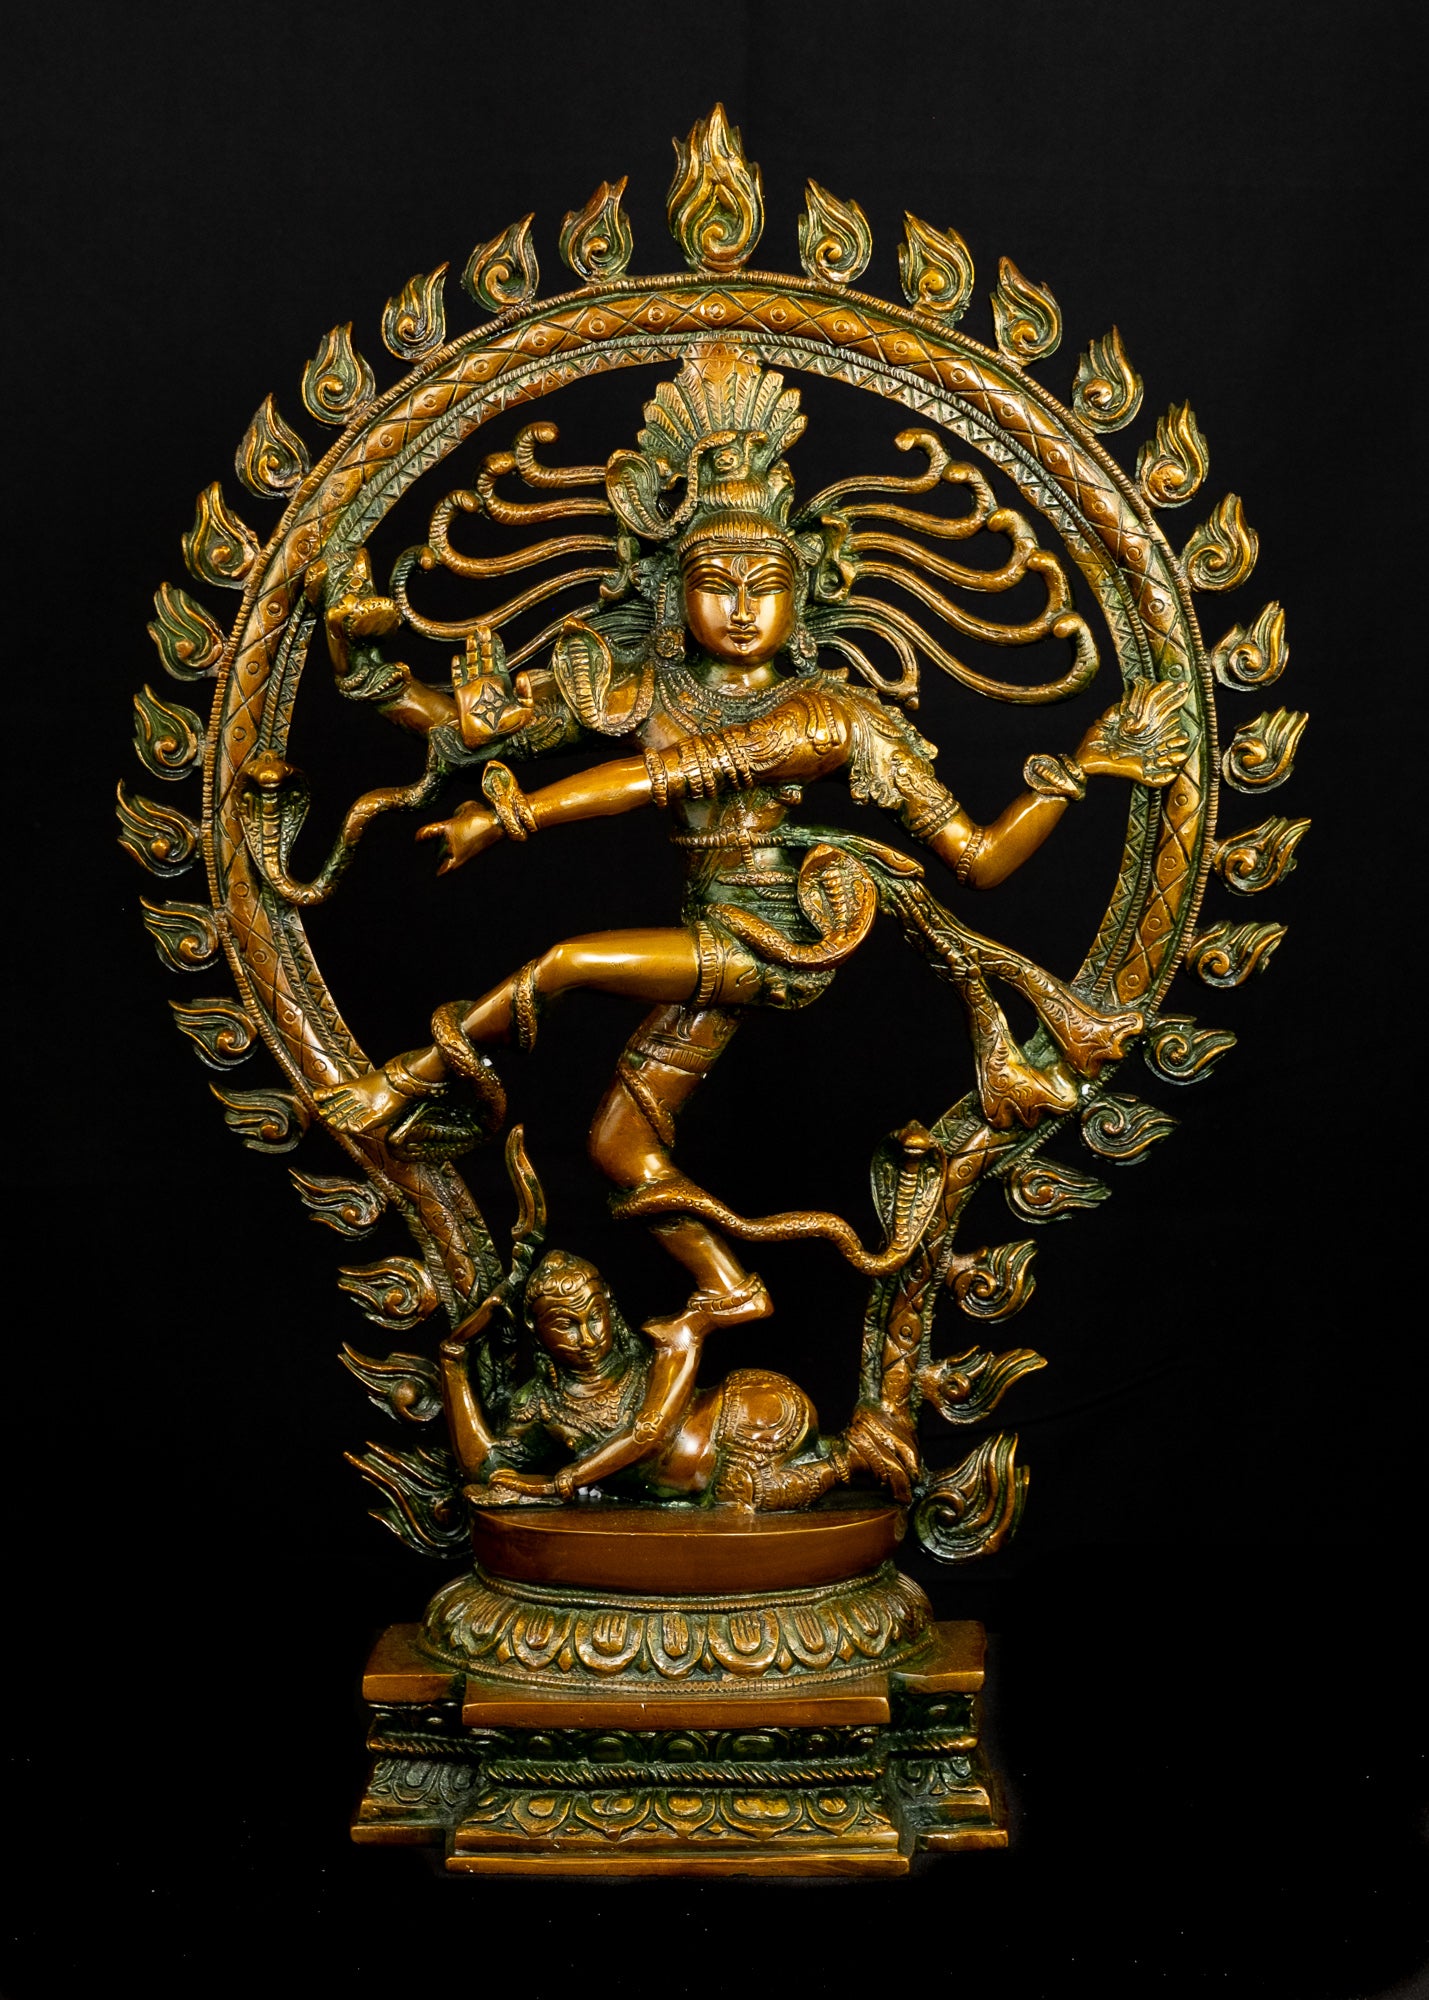 Nataraja - The Hindu Dance God Shiva